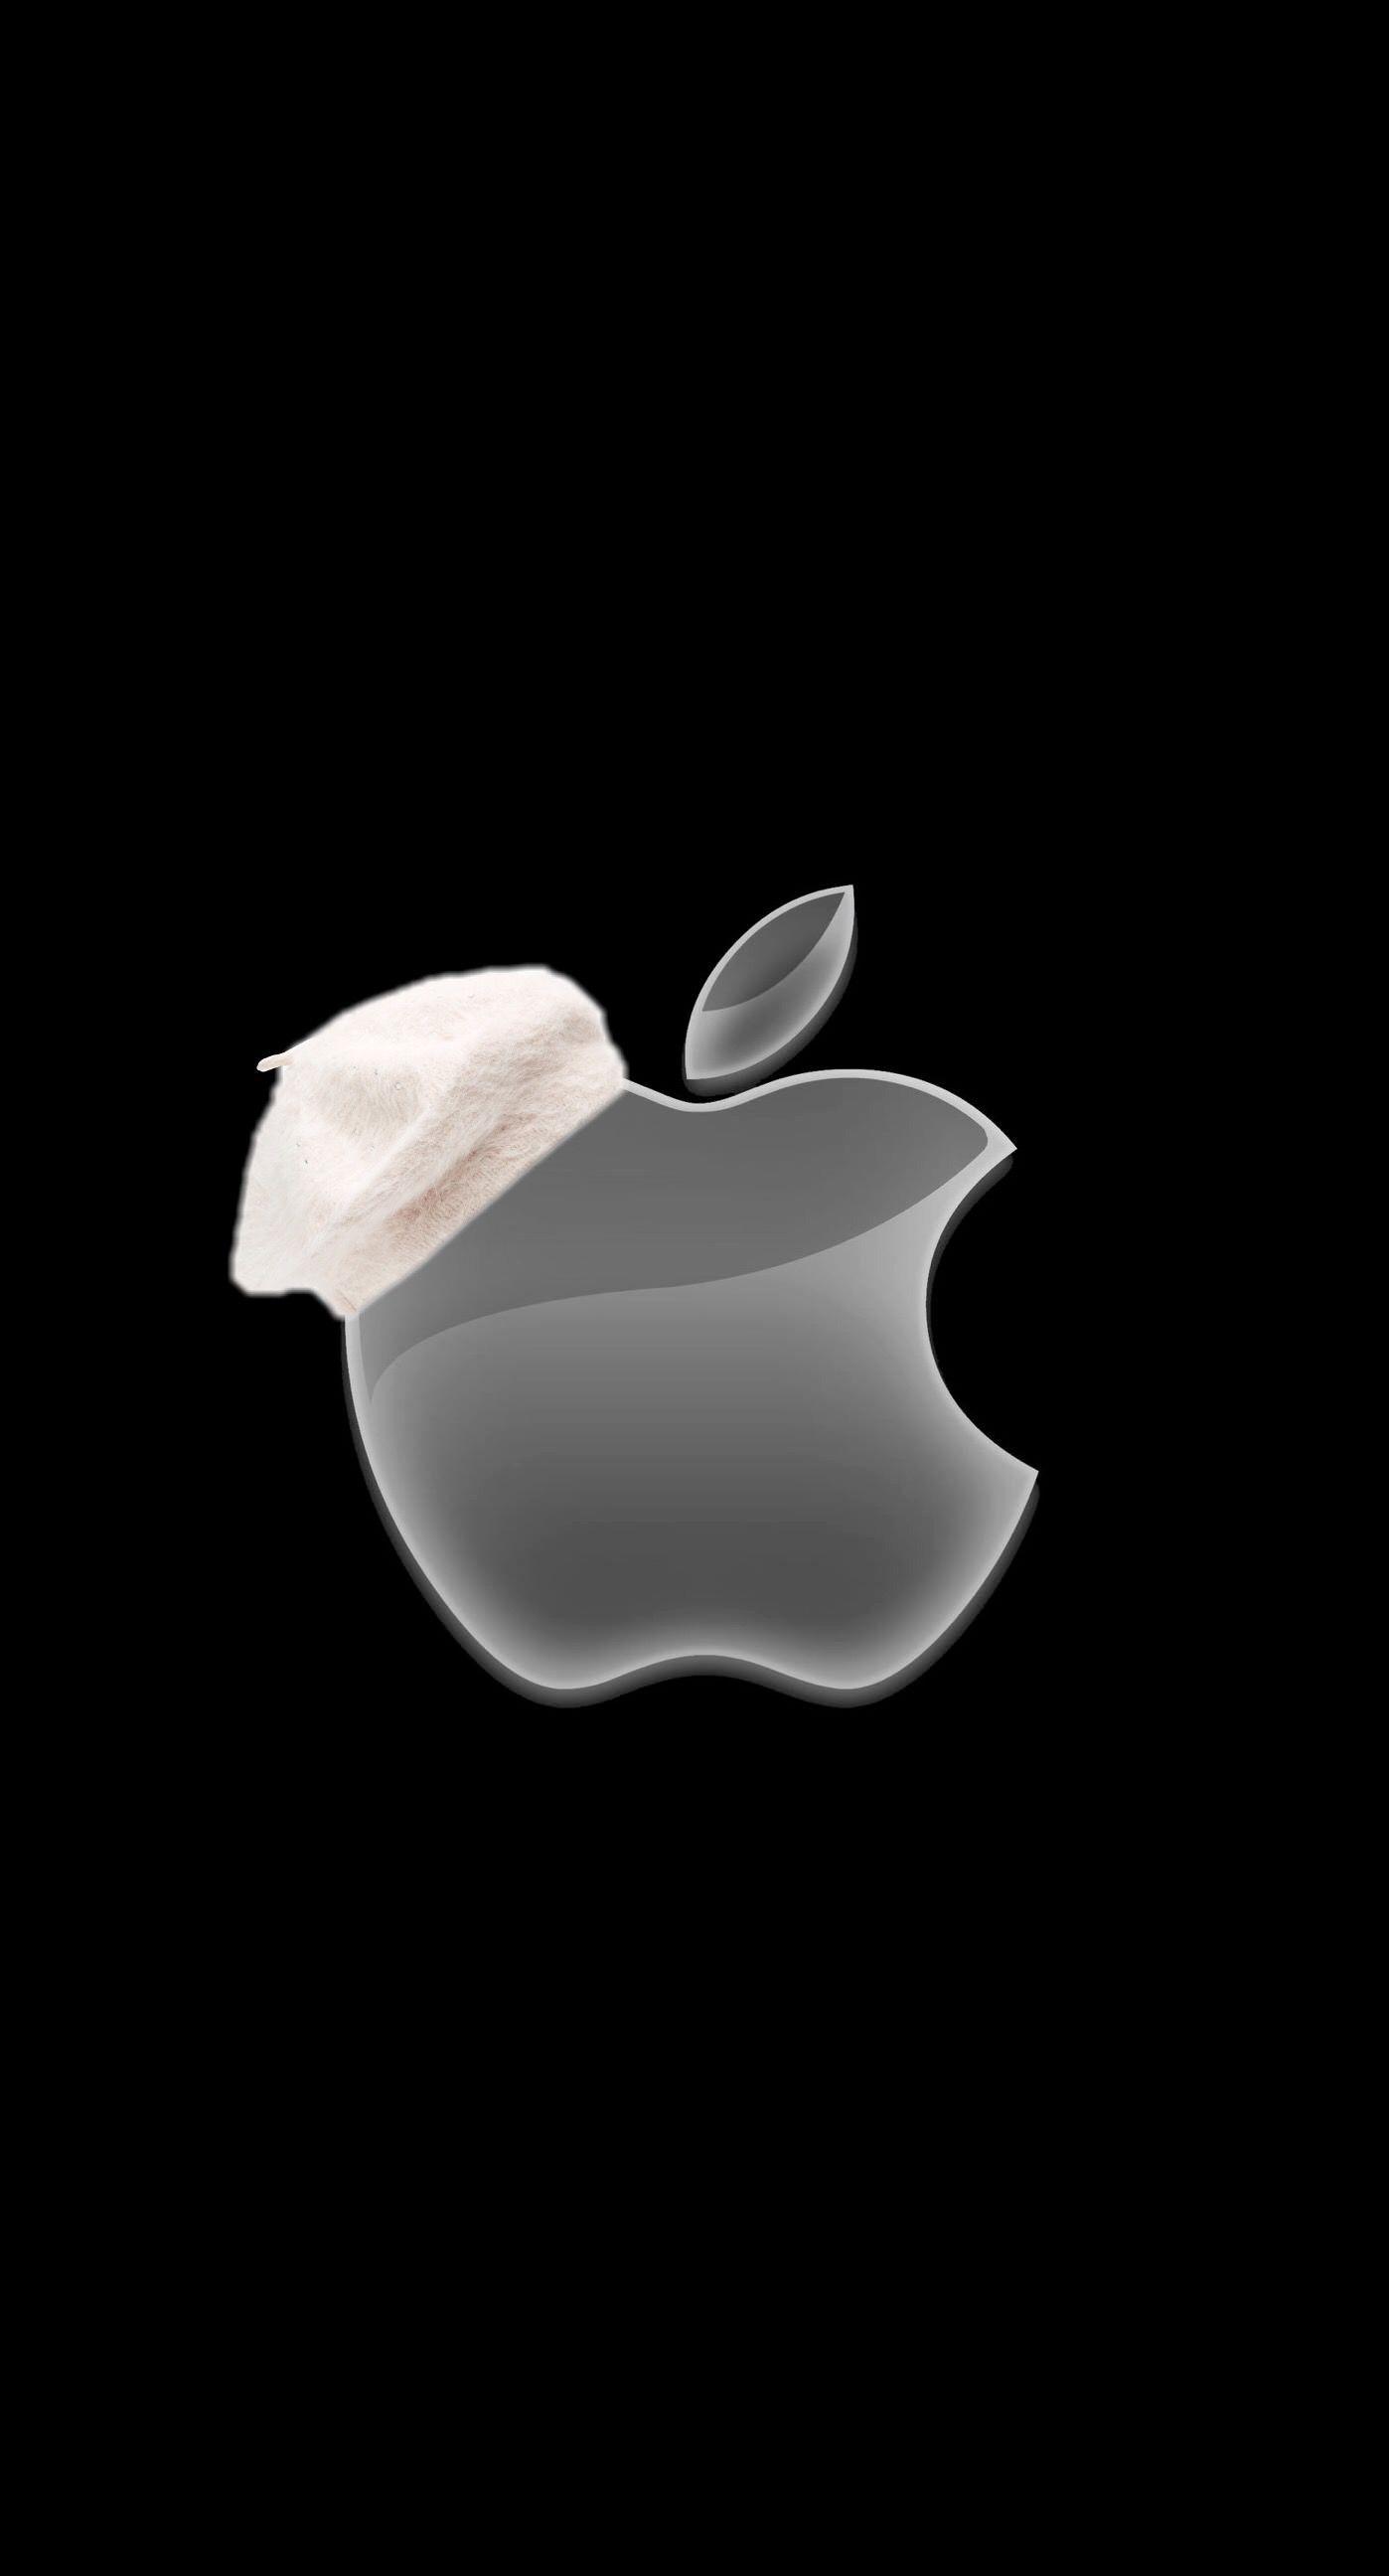 Apple Logo iPhone Wallpaper Free Apple Logo iPhone